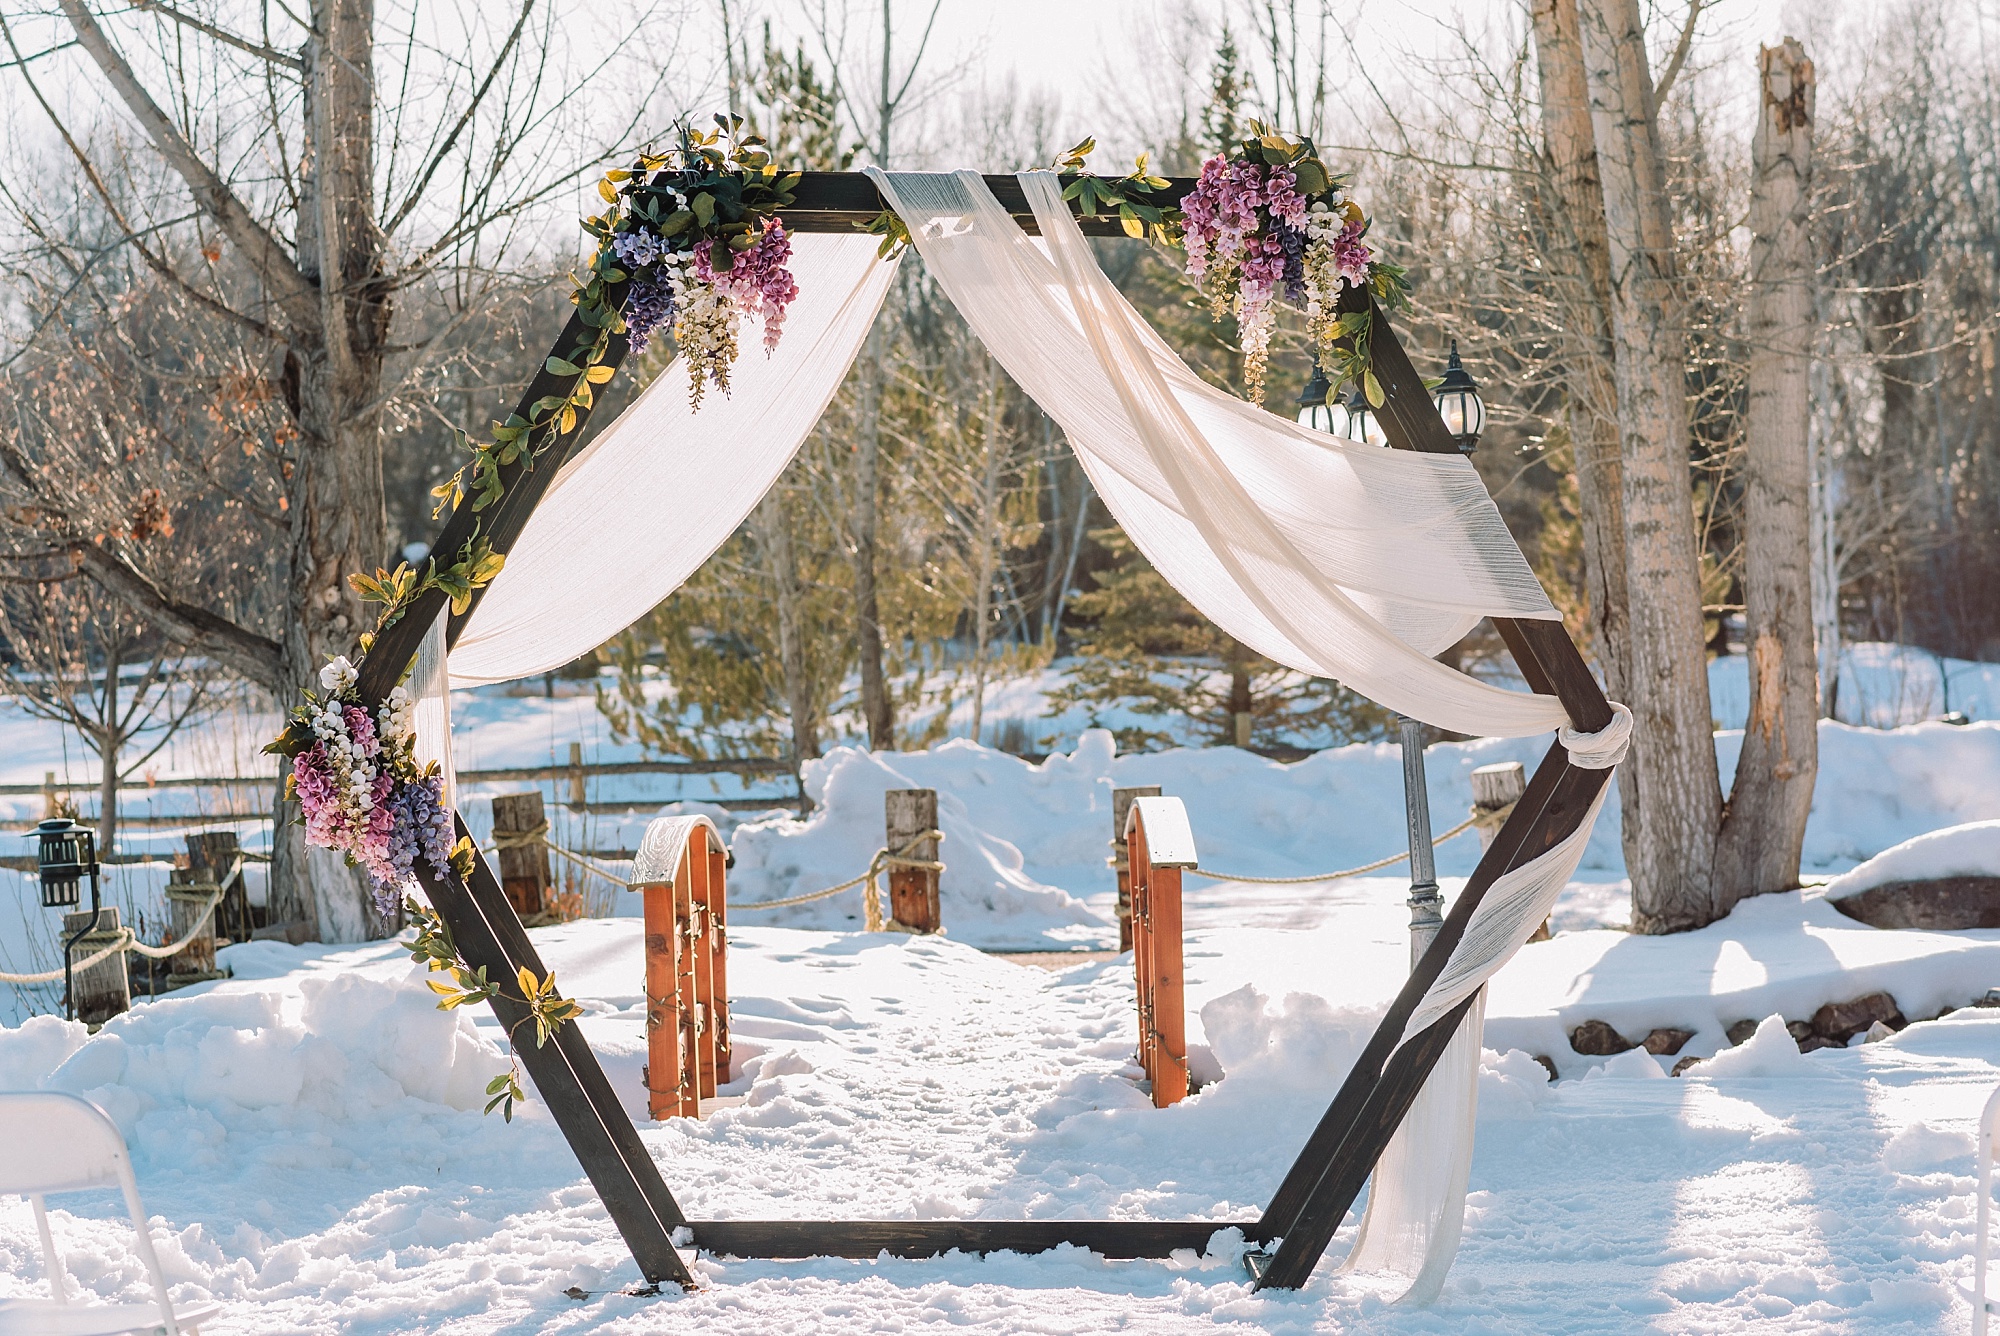 outdoor-winter-wedding-flower-hexagon-arch